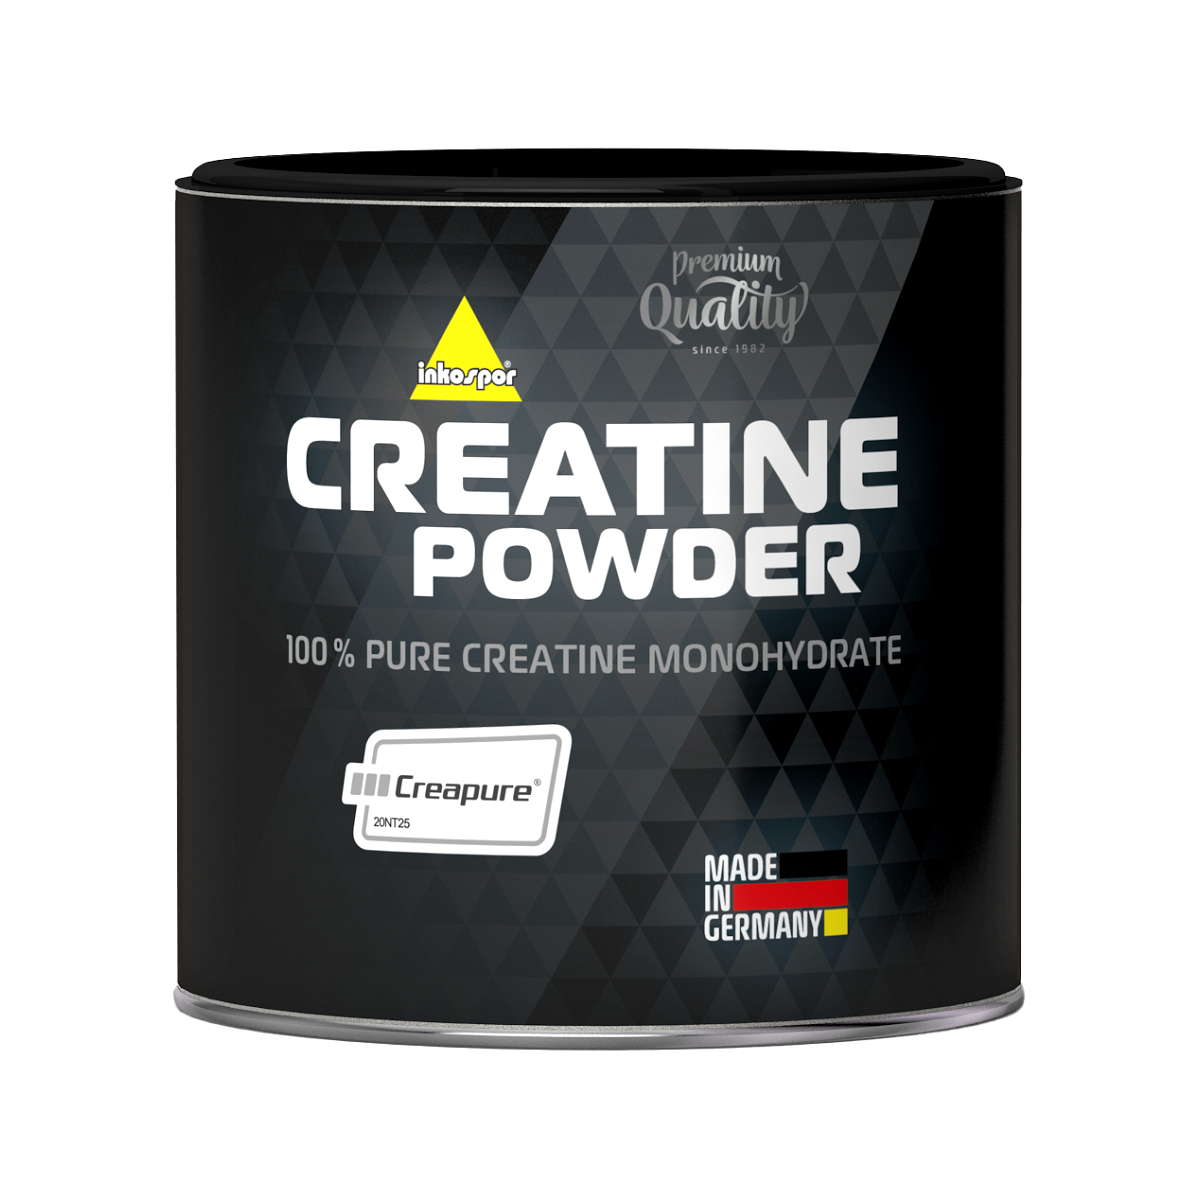 creatin-powder